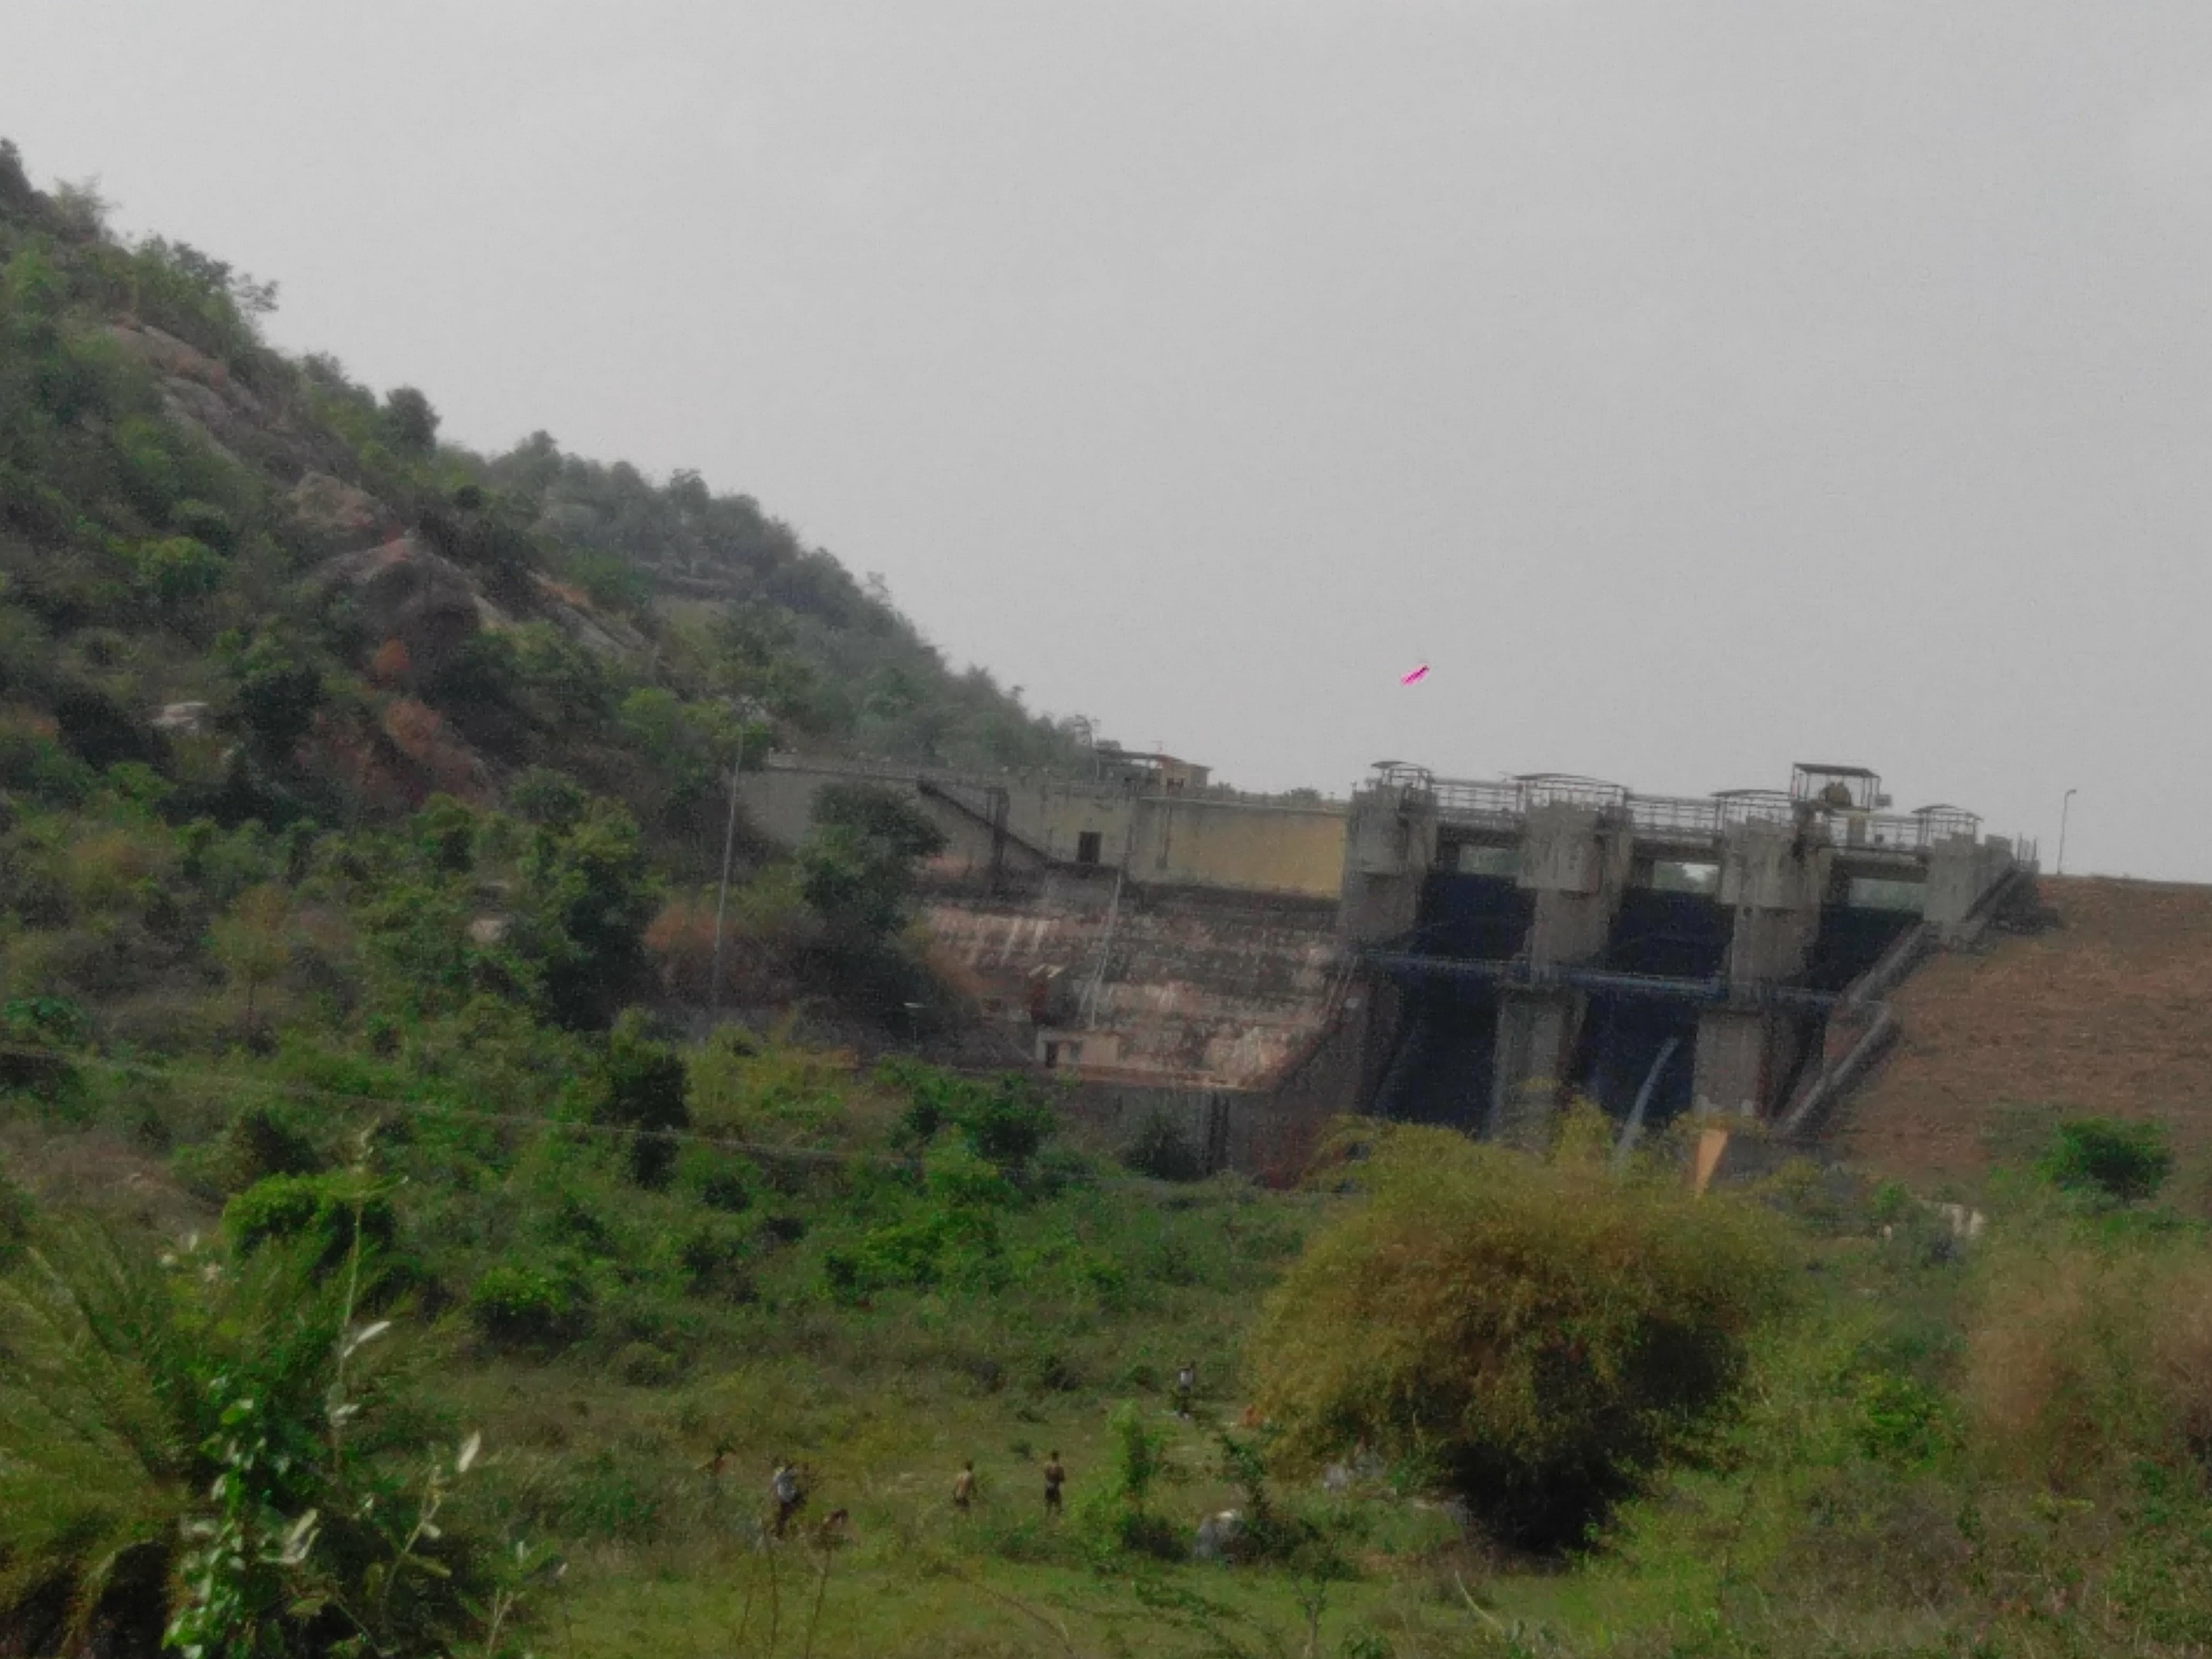 the dam itself